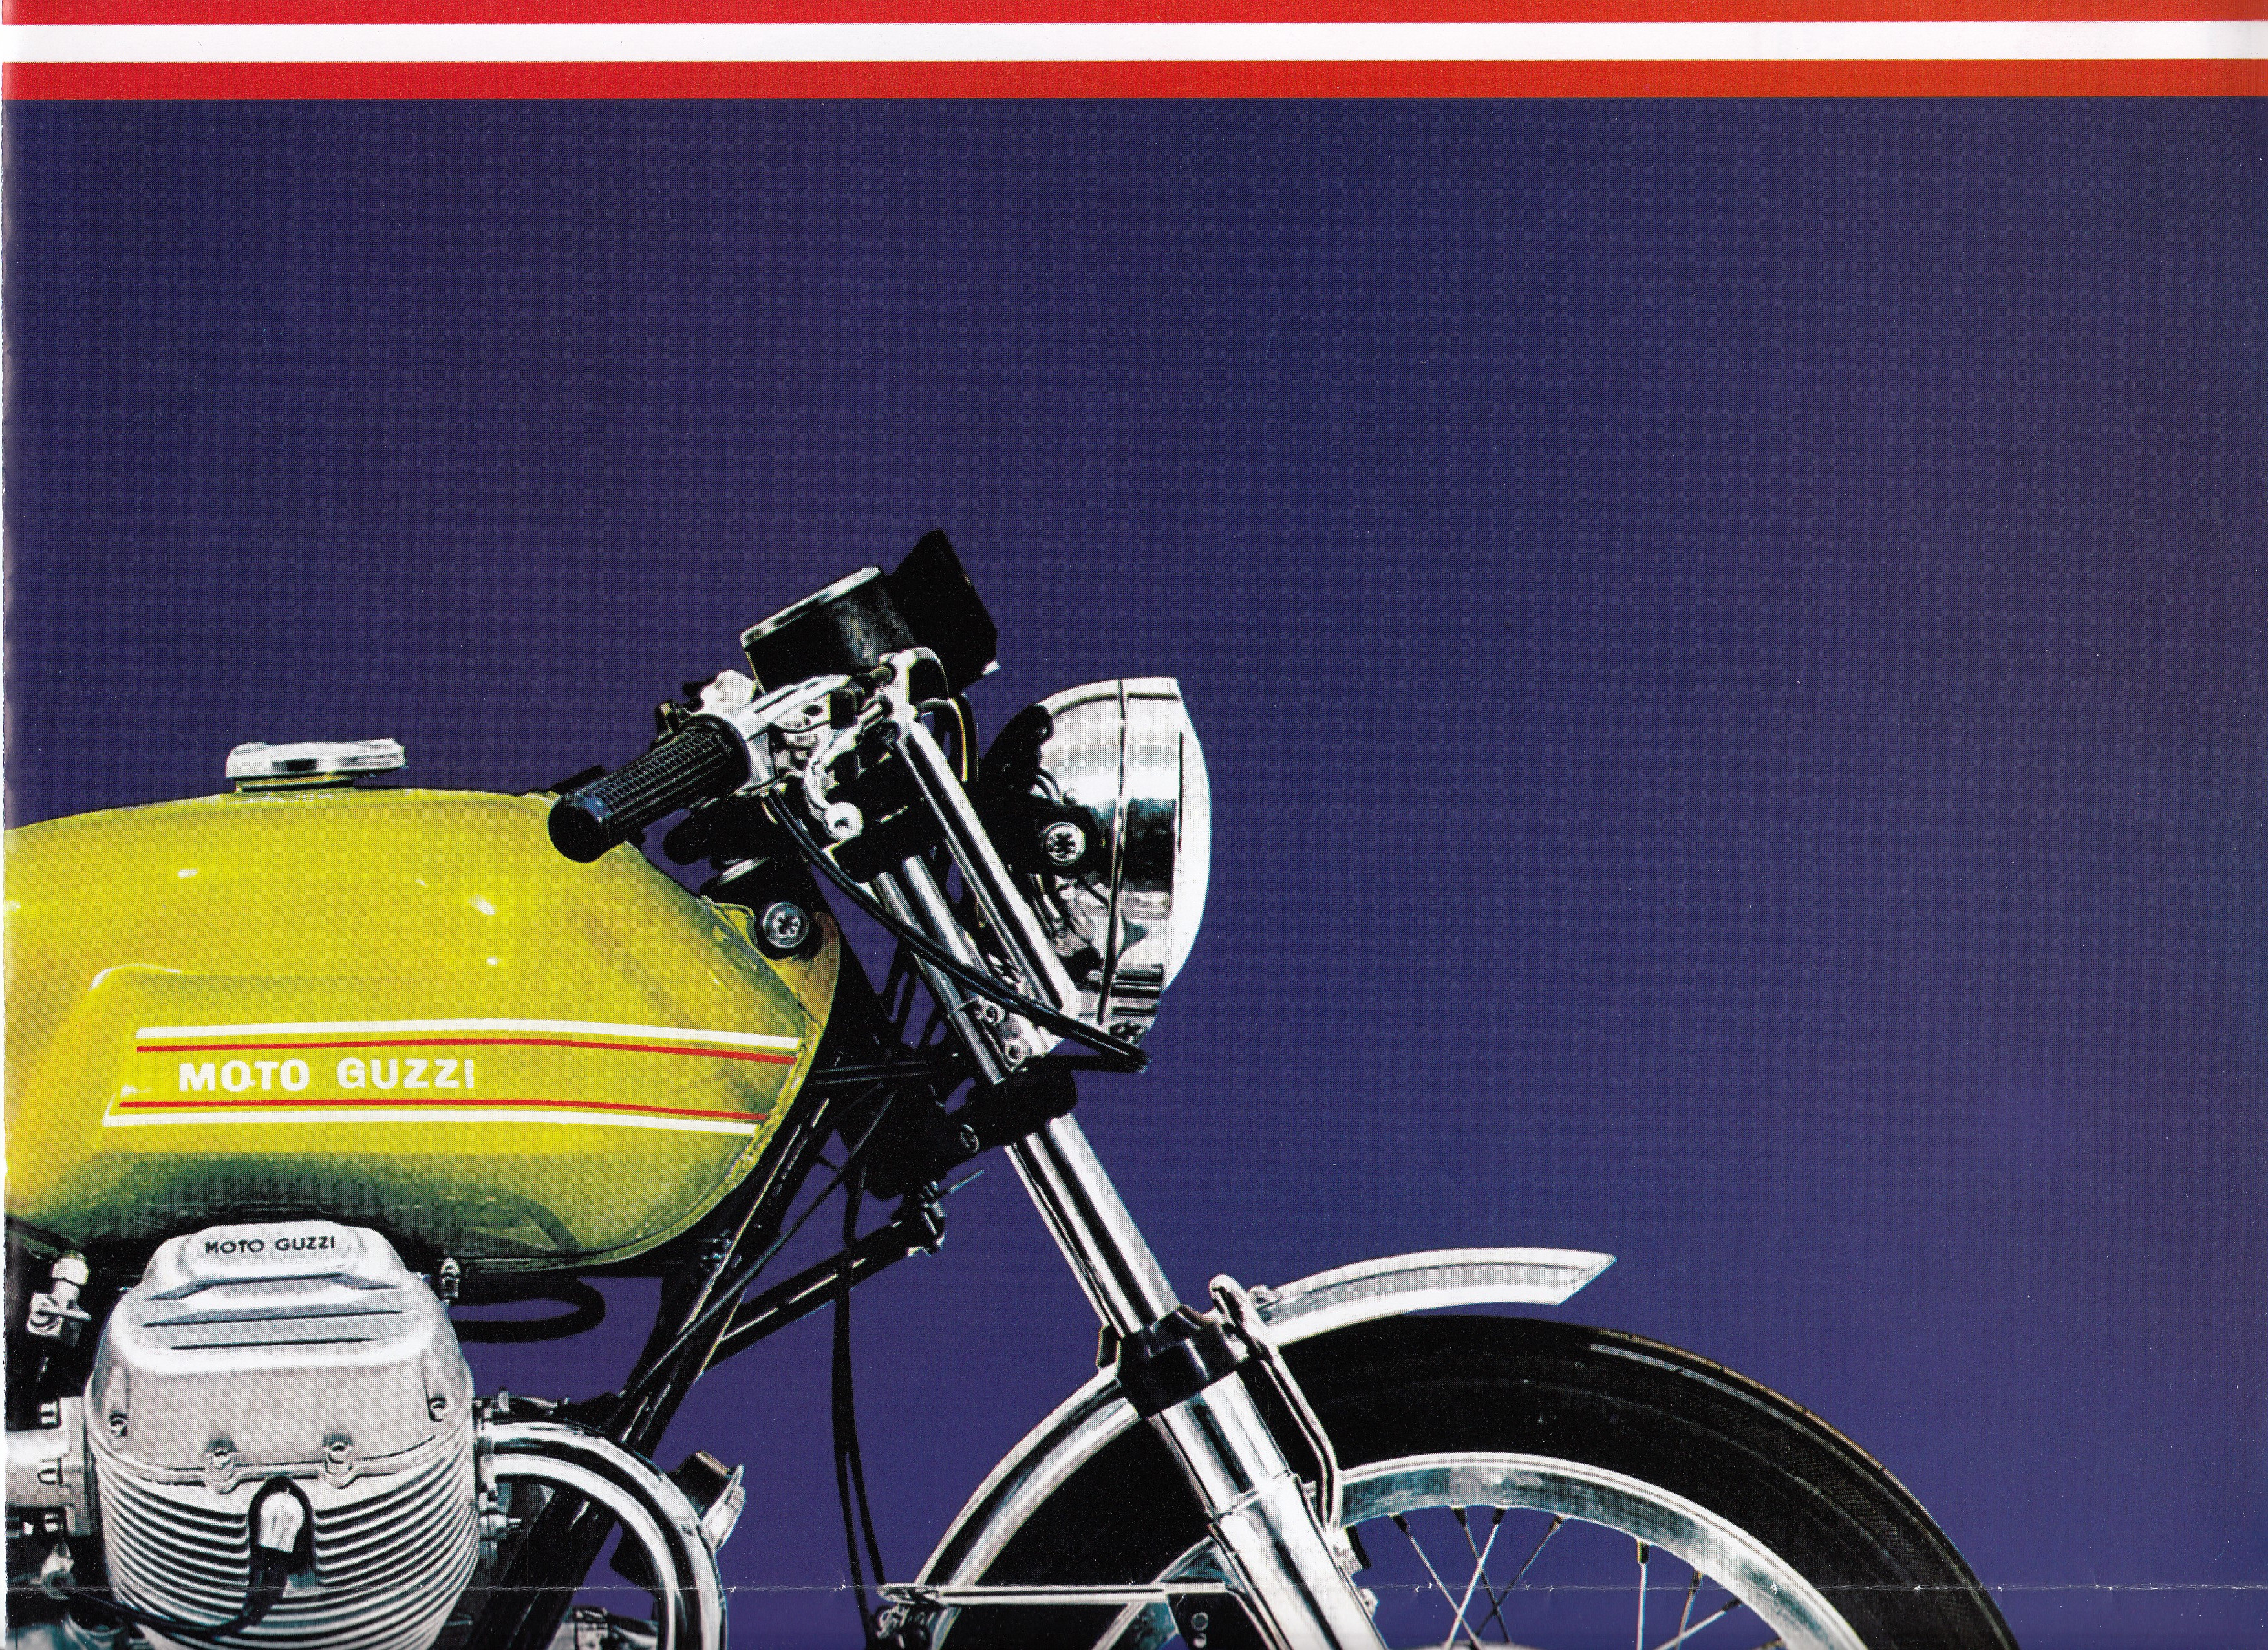 Moto Guzzi brochure: V7 Sport, 850 California, 850 GT